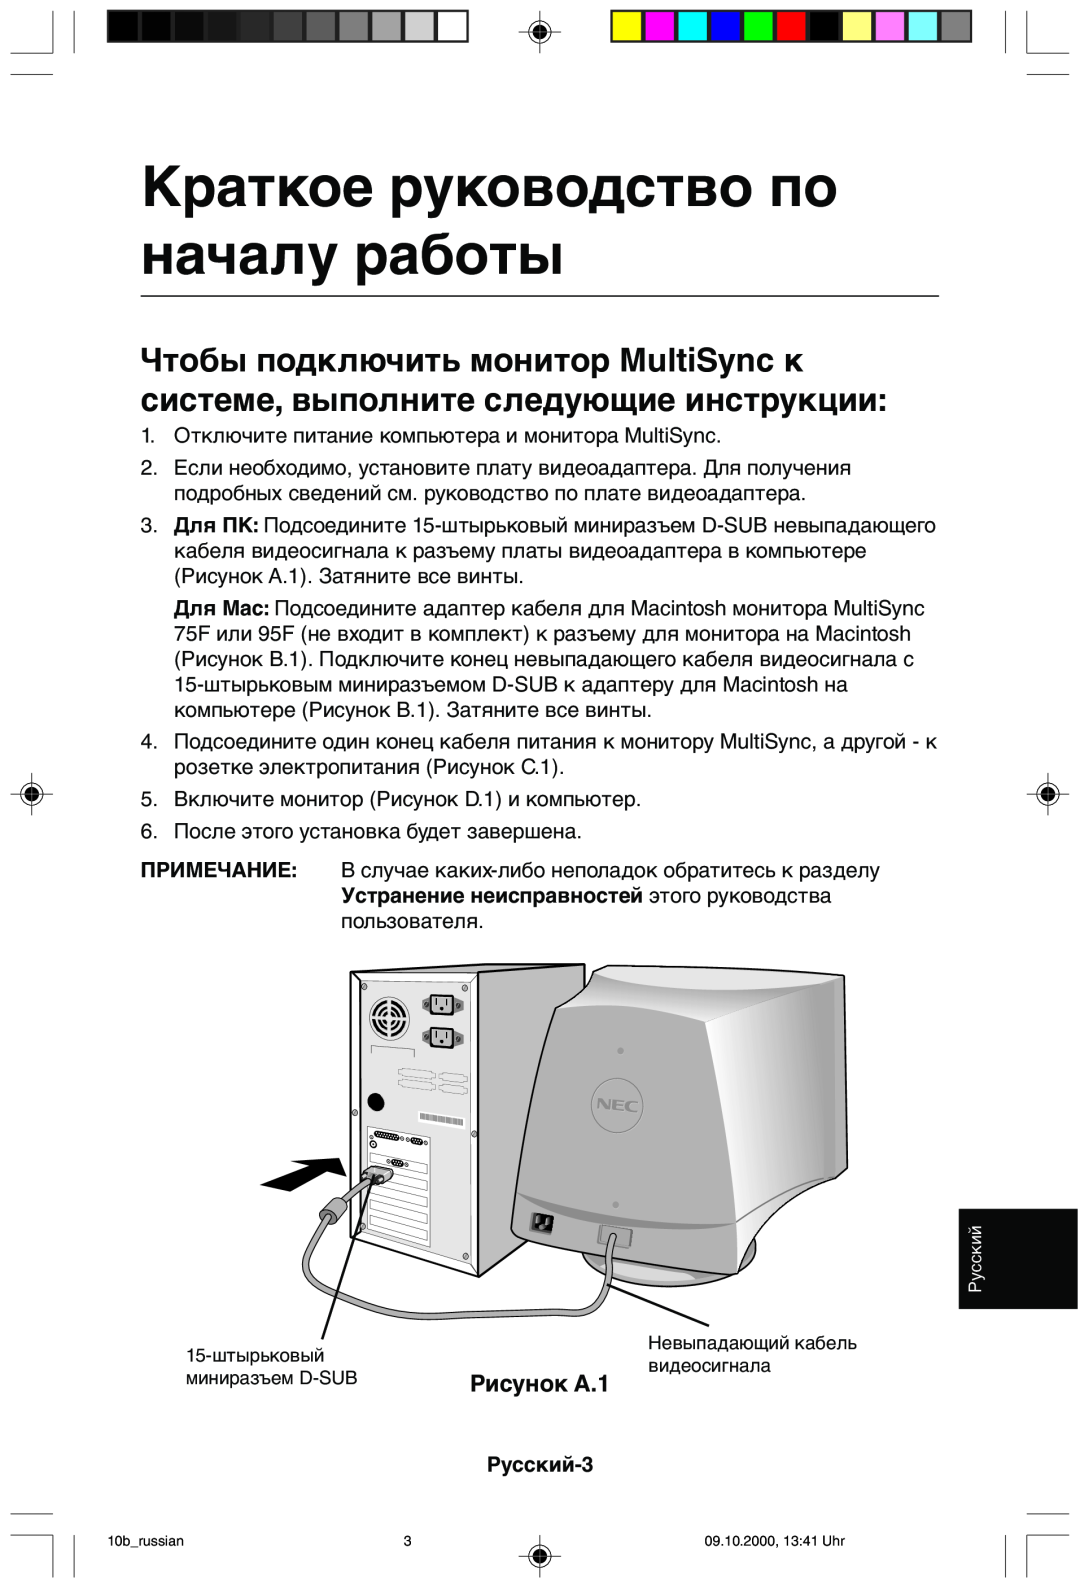 NEC 95F user manual Краткое руководство по началу работы, Рисунок A.1 